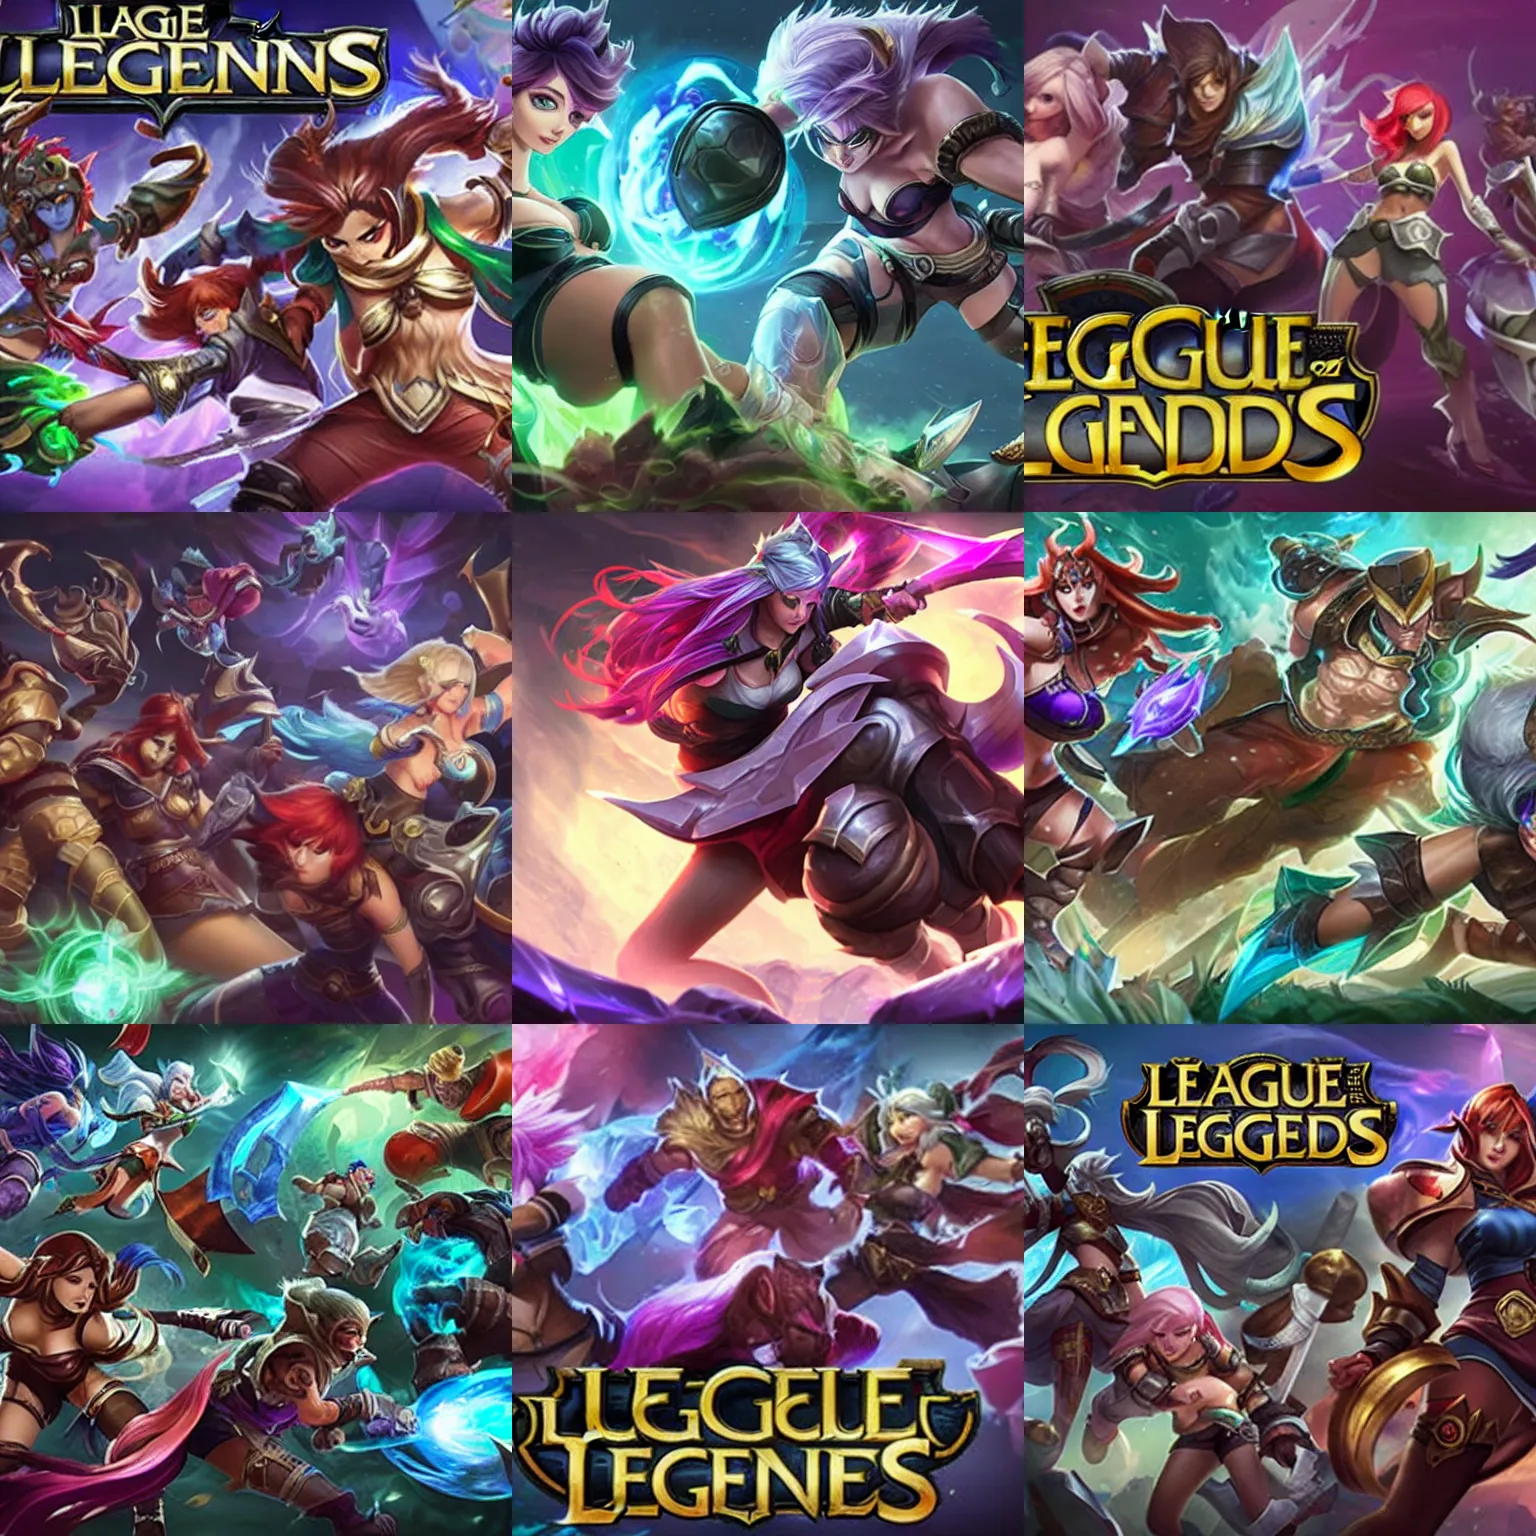 League of Legends Champion Collage 2018 (1) by Dextar-Gravelle on DeviantArt